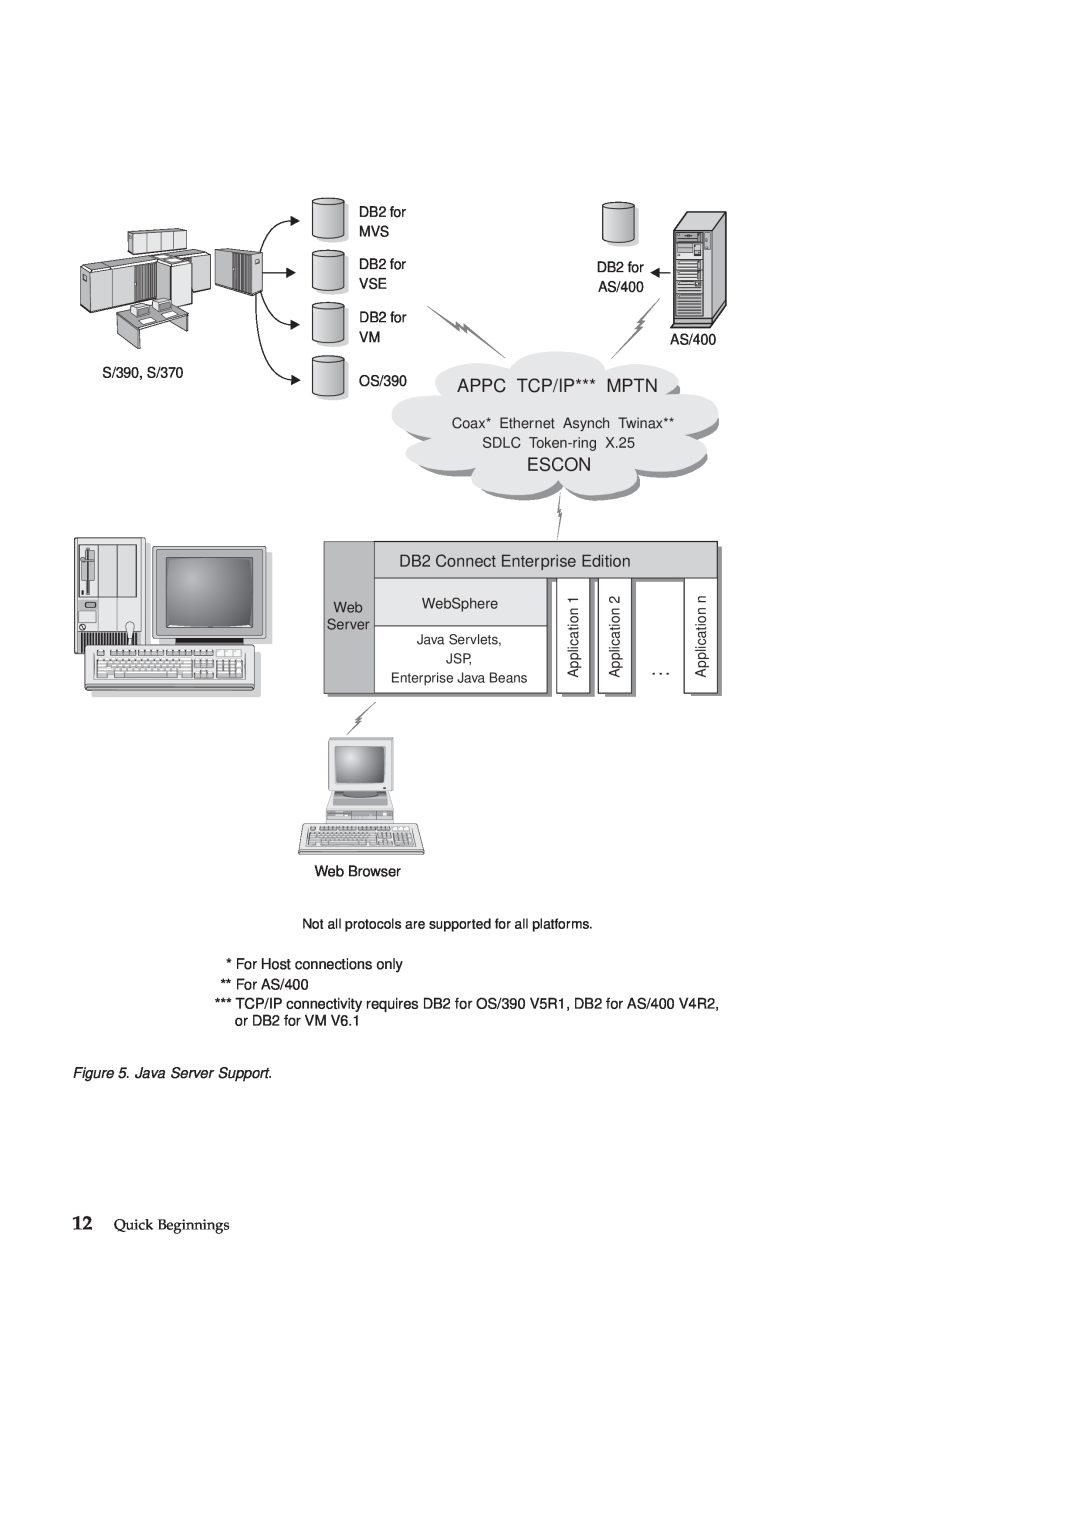 IBM GC09-2830-00 manual OS/390 APPC TCP/IP*** MPTN, Escon, Java Server Support, Quick Beginnings 